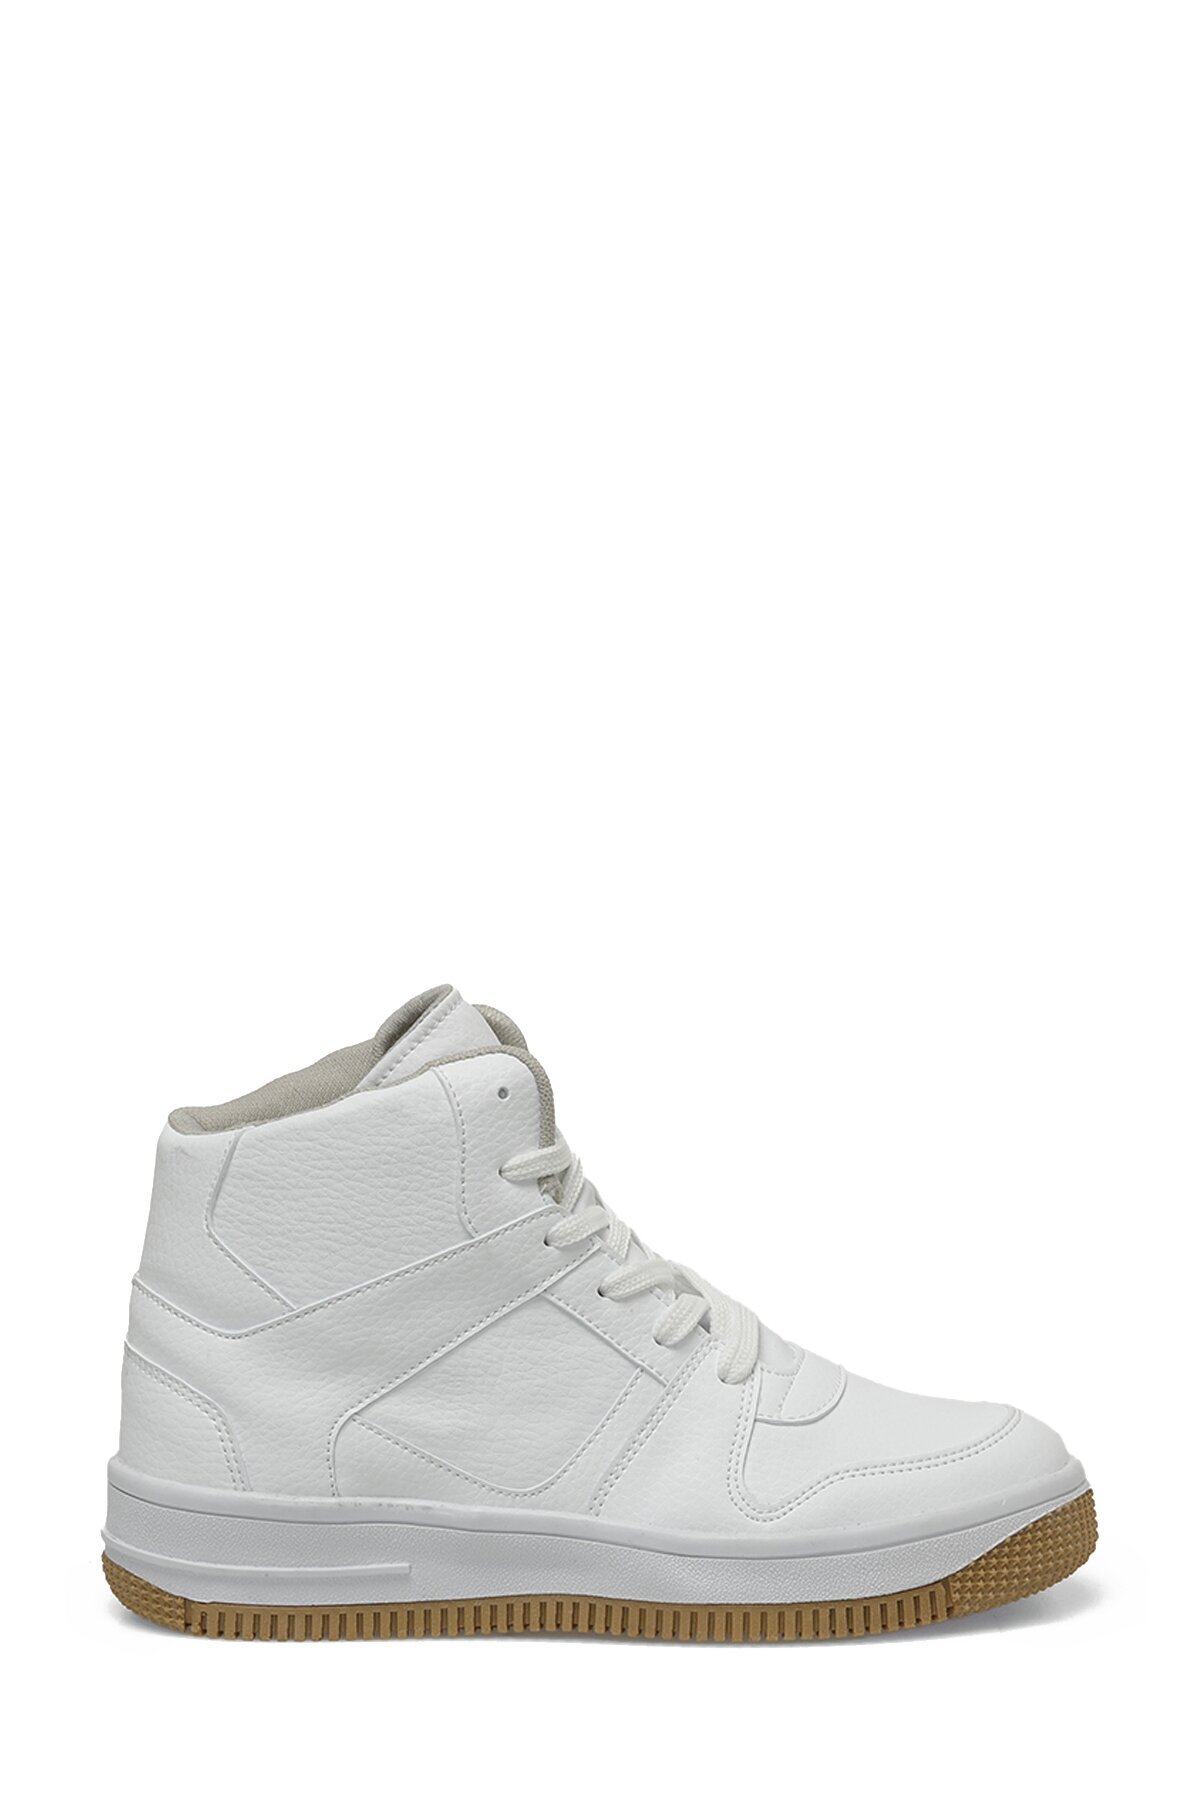 Butigo Penelope 3PR White Women's Sneaker Boot